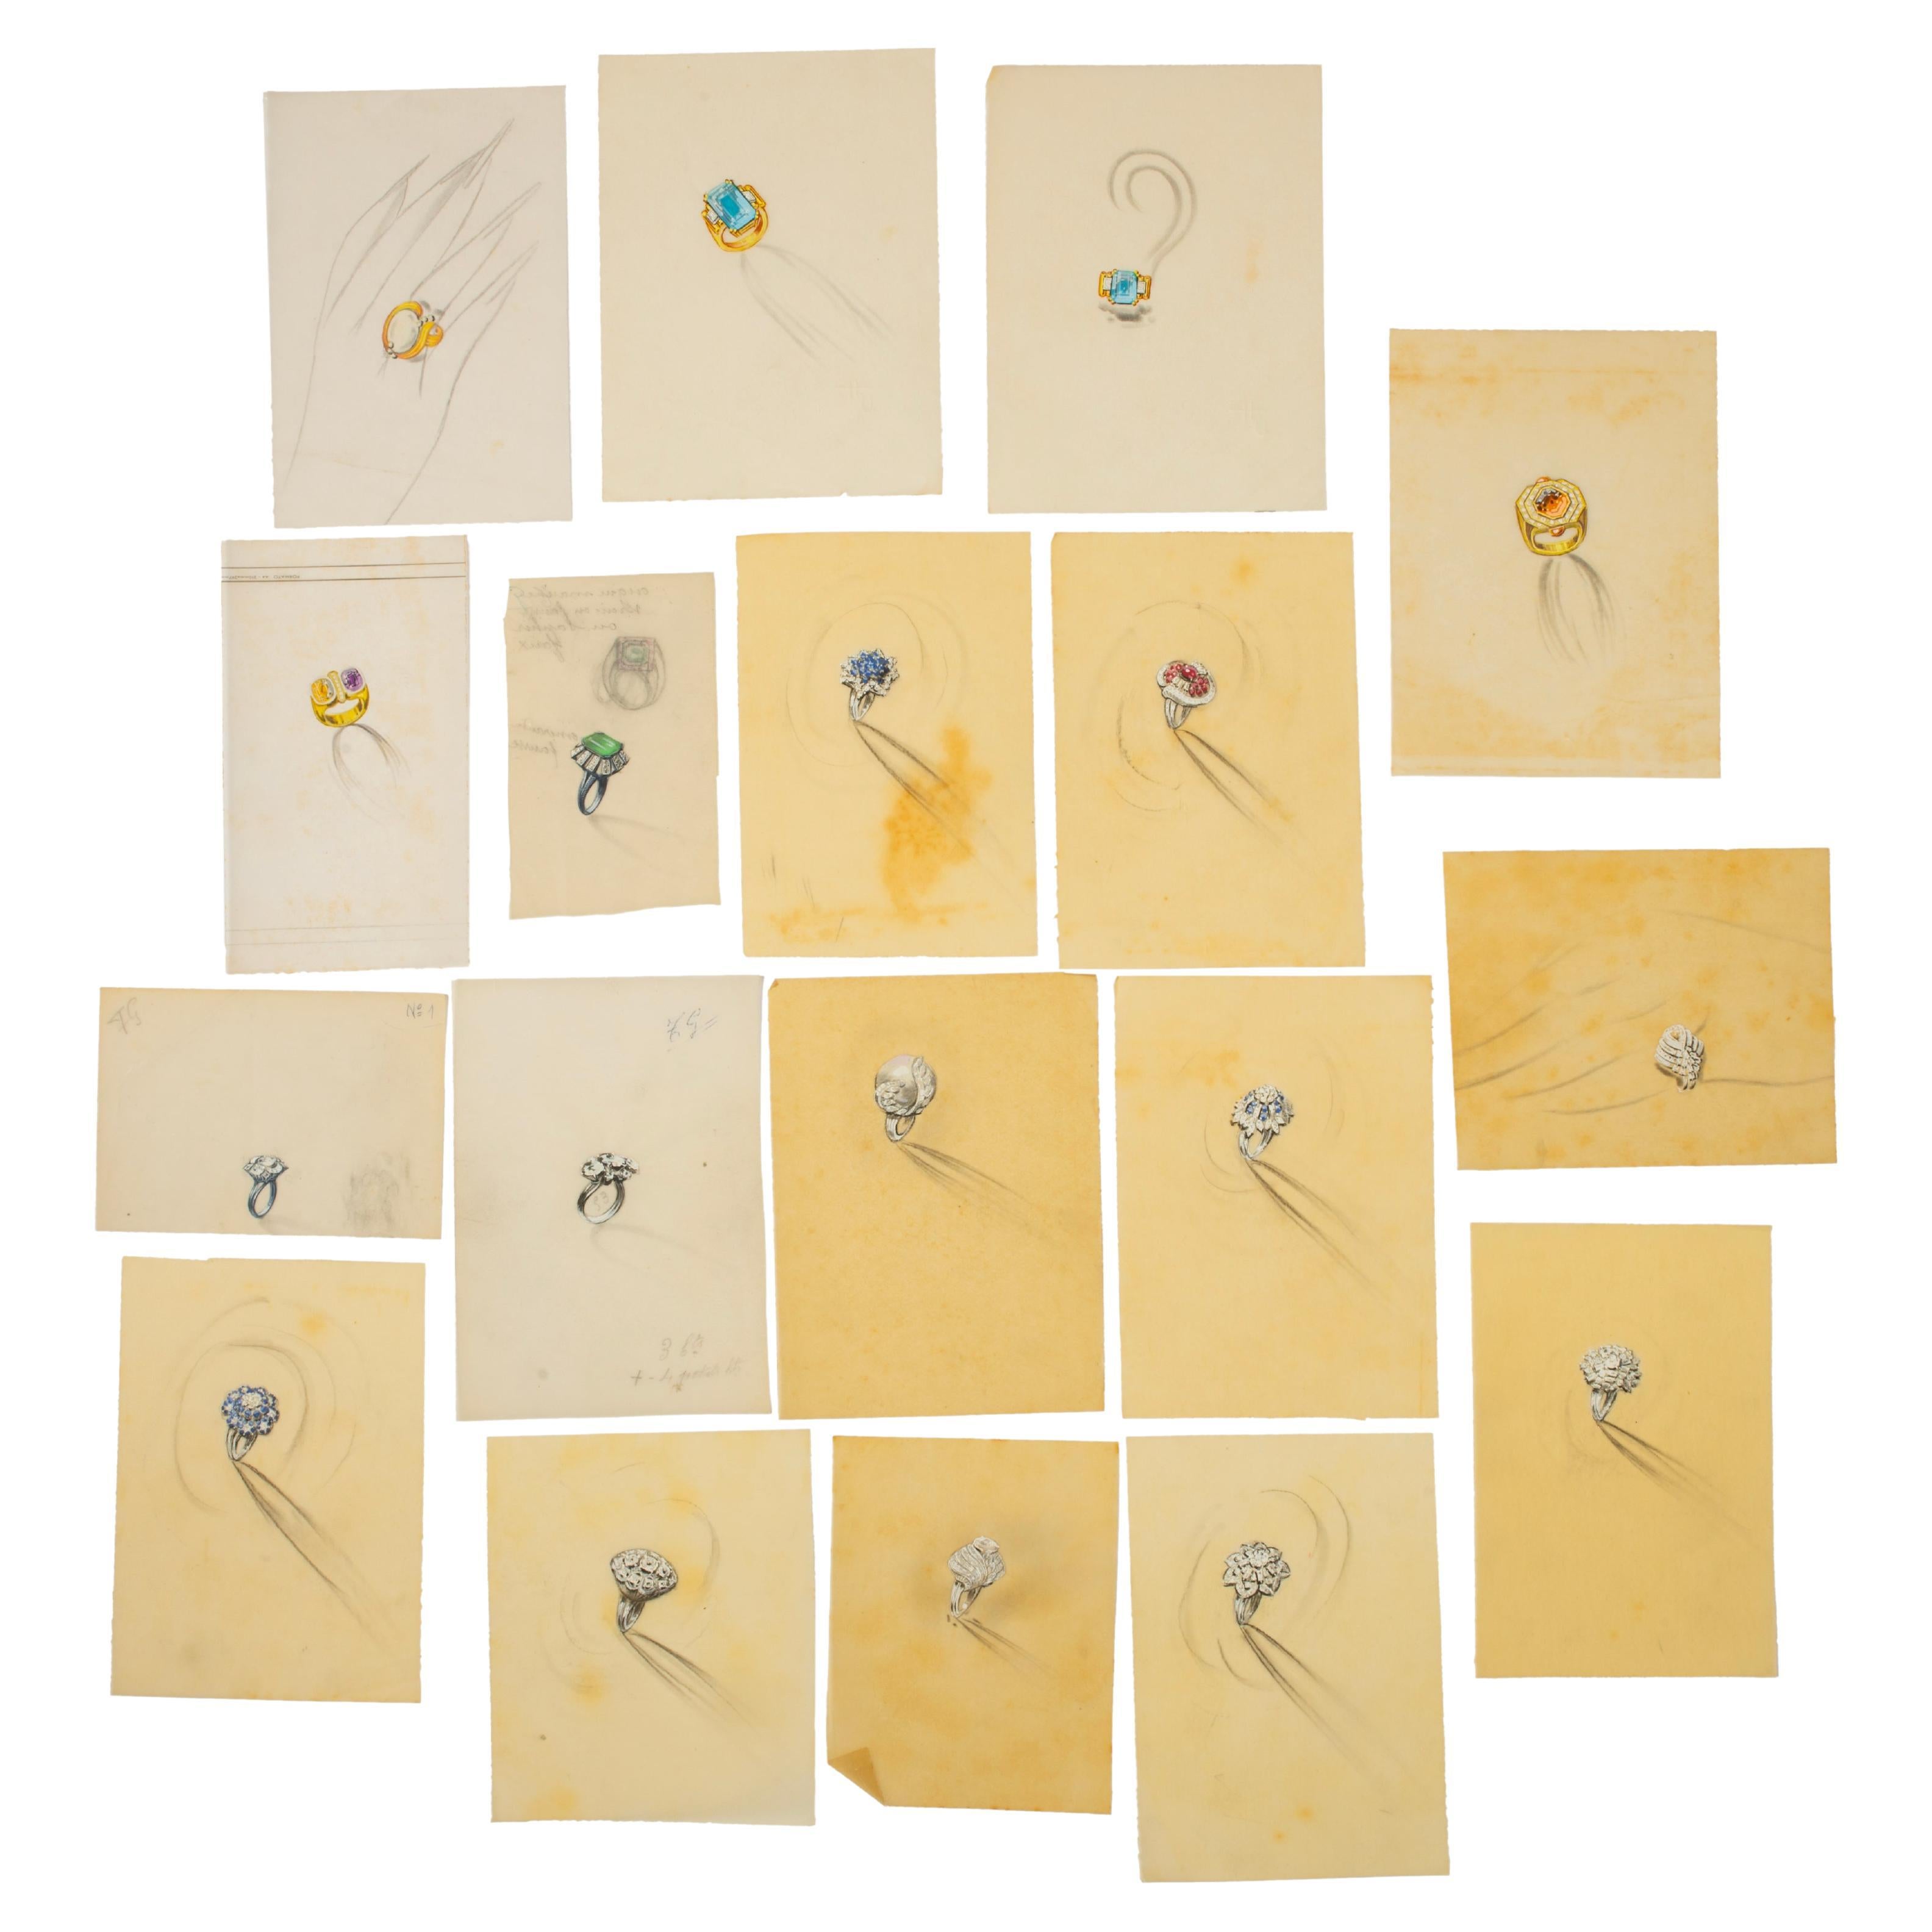 Group of 18 Original Vintage Gouache Ring Designs, Paris, 1970s or 80s